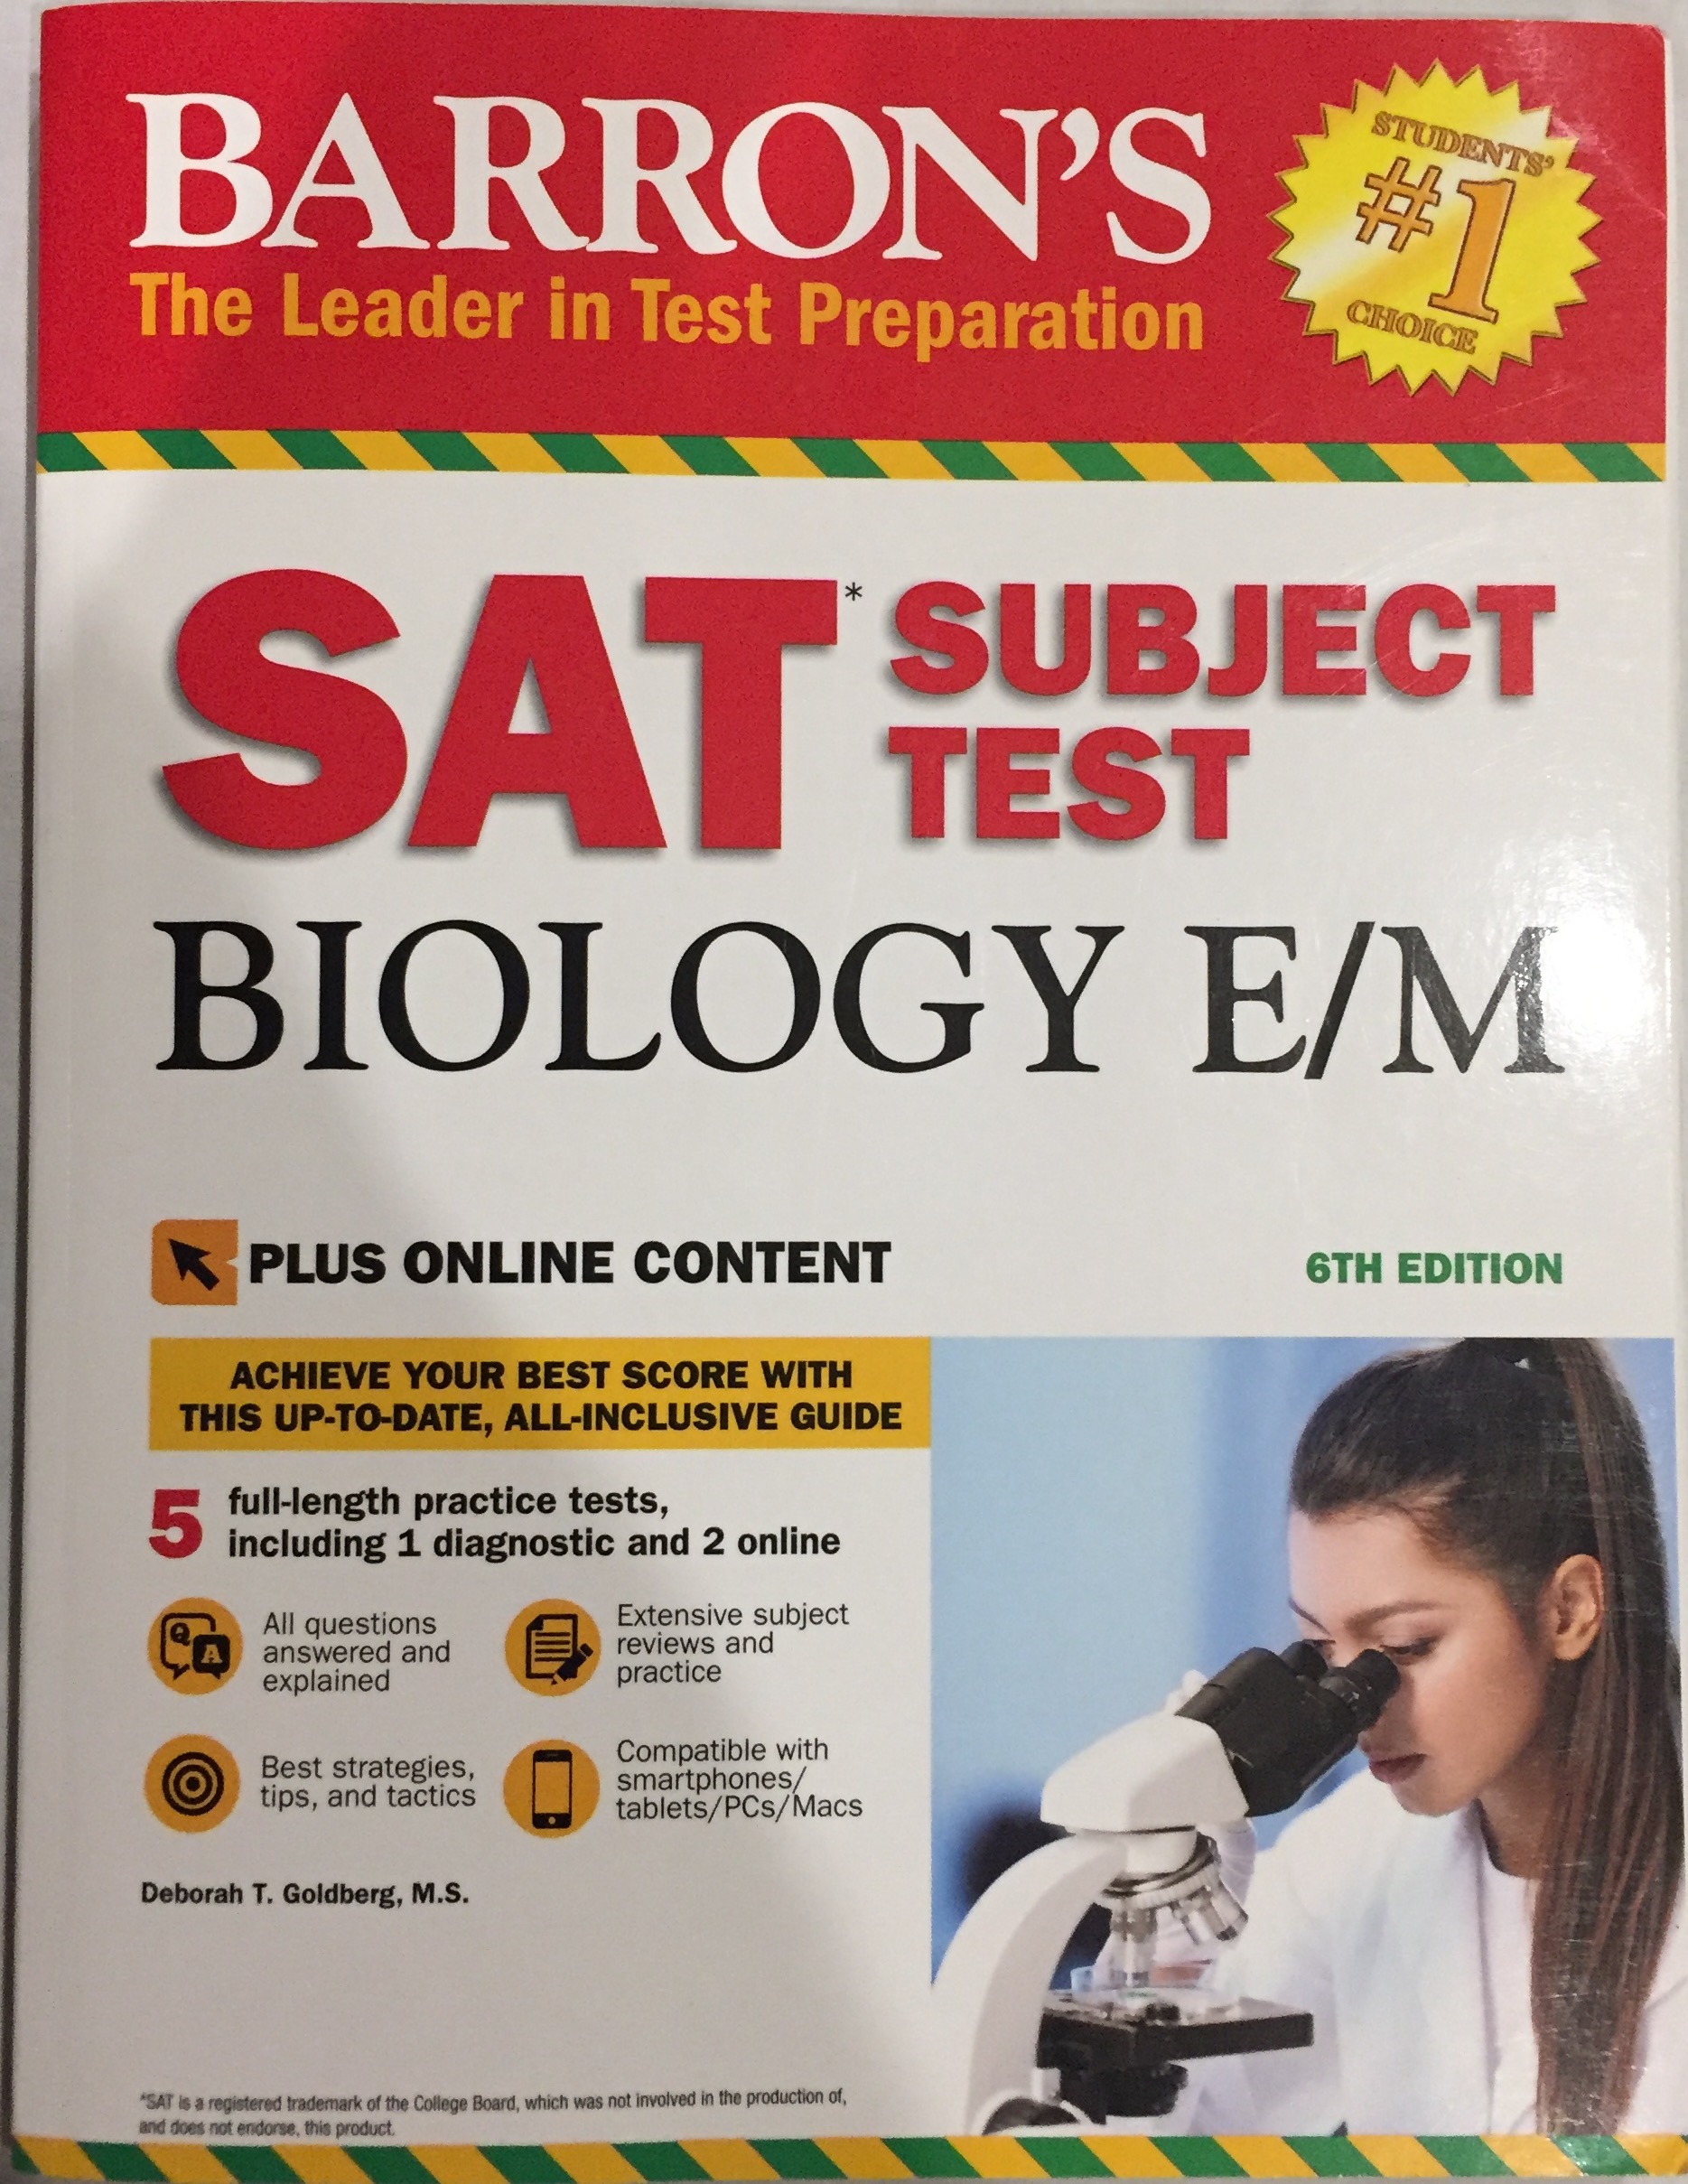 barron's sat subject test: biology e/m